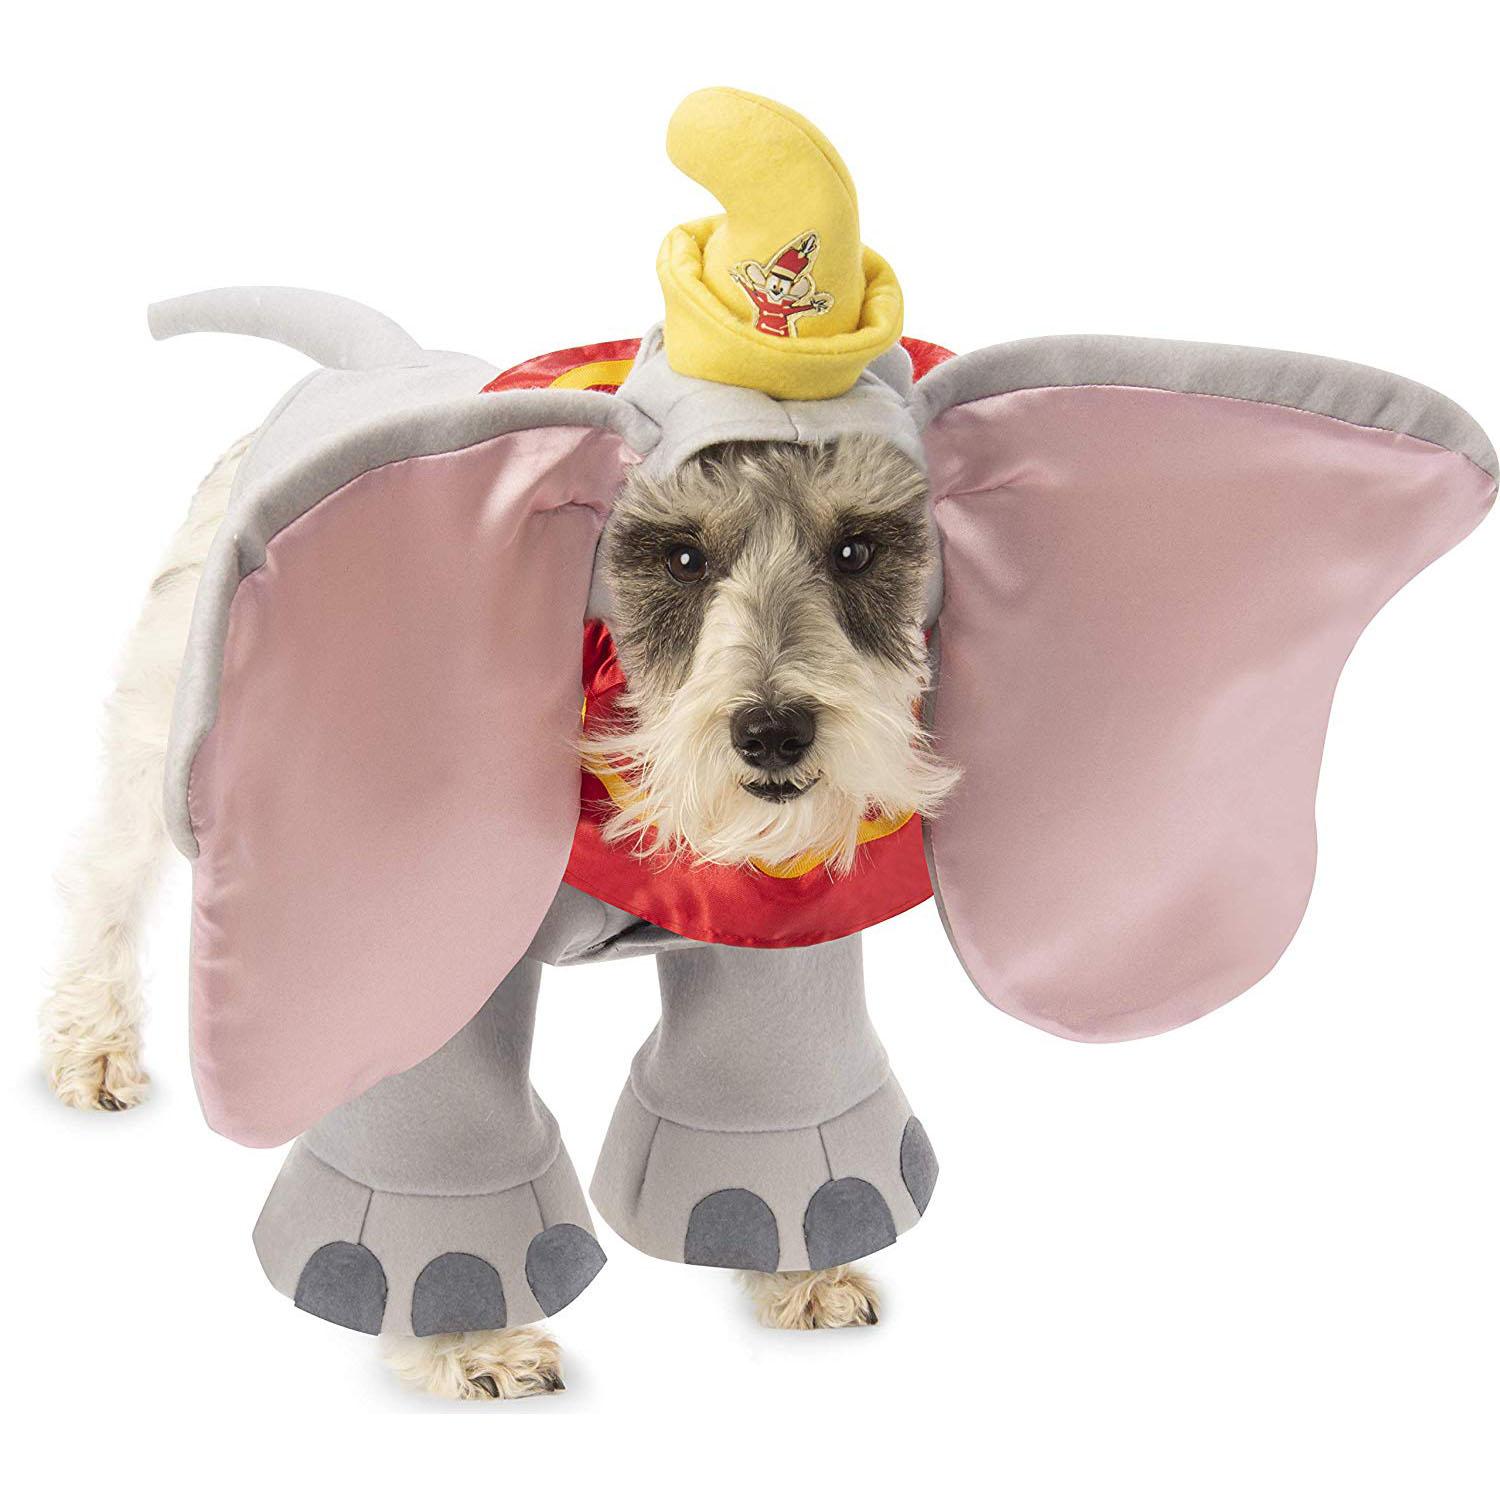 Disney Dumbo Dog Costume by Rubie's 